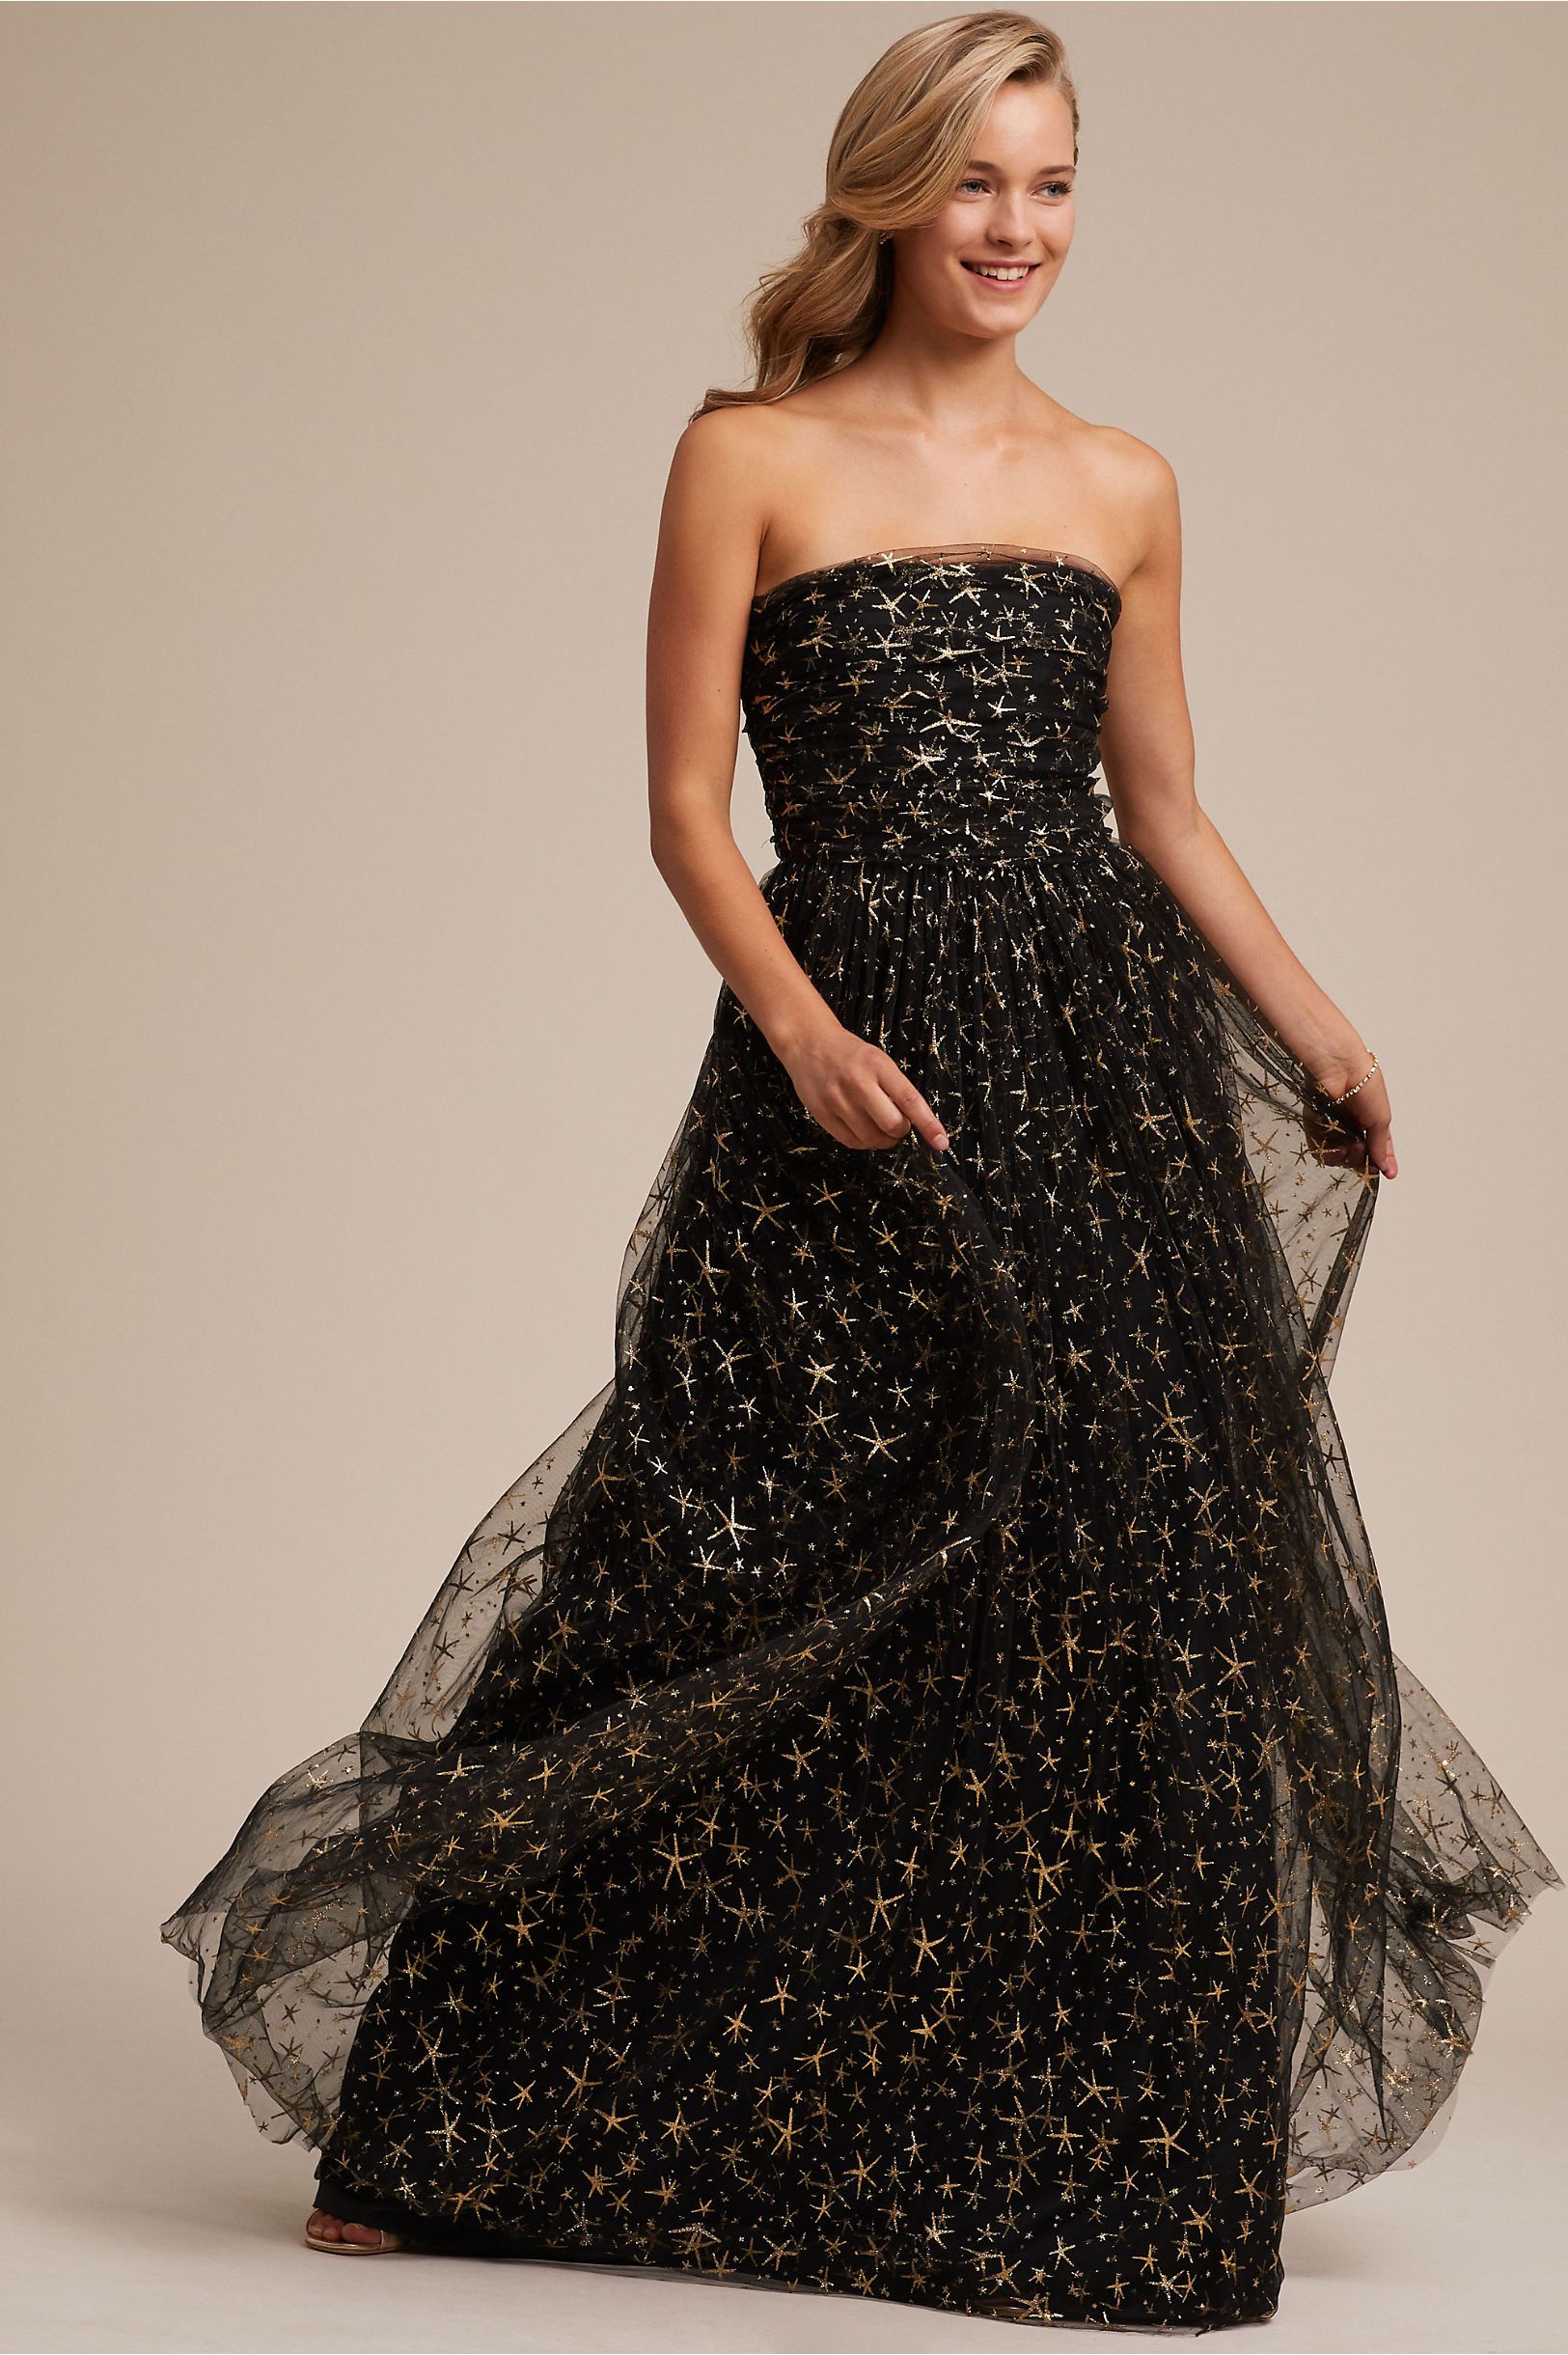 BHLDN's Joanna August Joanna August Brenda Dress in Star Tulle Black | BHLDN